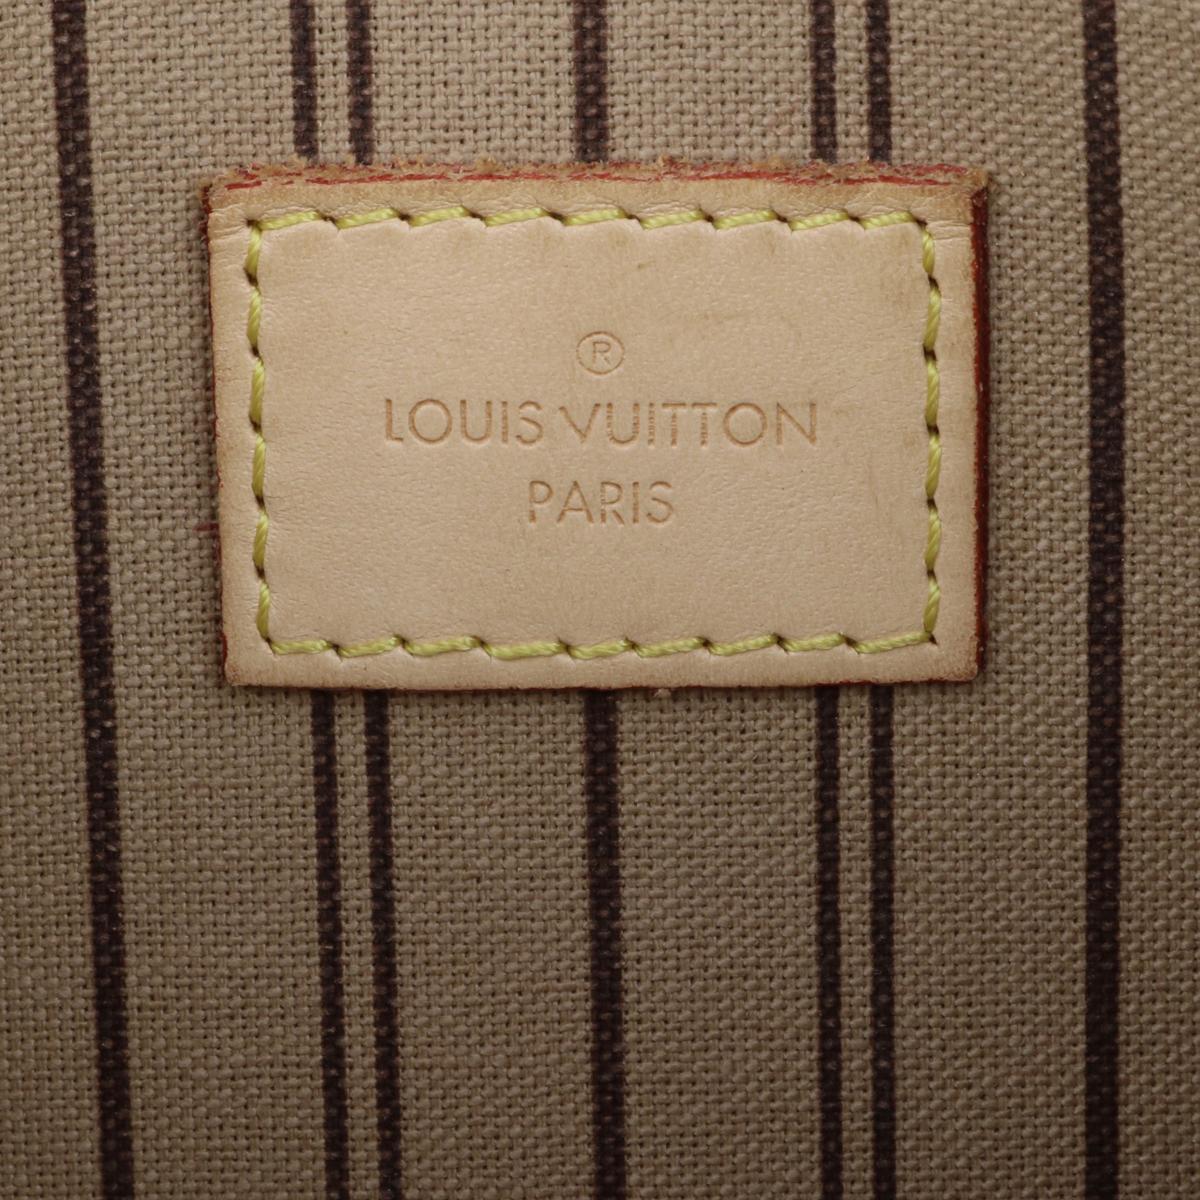 Louis Vuitton Neverfull MM Pochette Pouch in Monogram with Beige Interior 2017 10